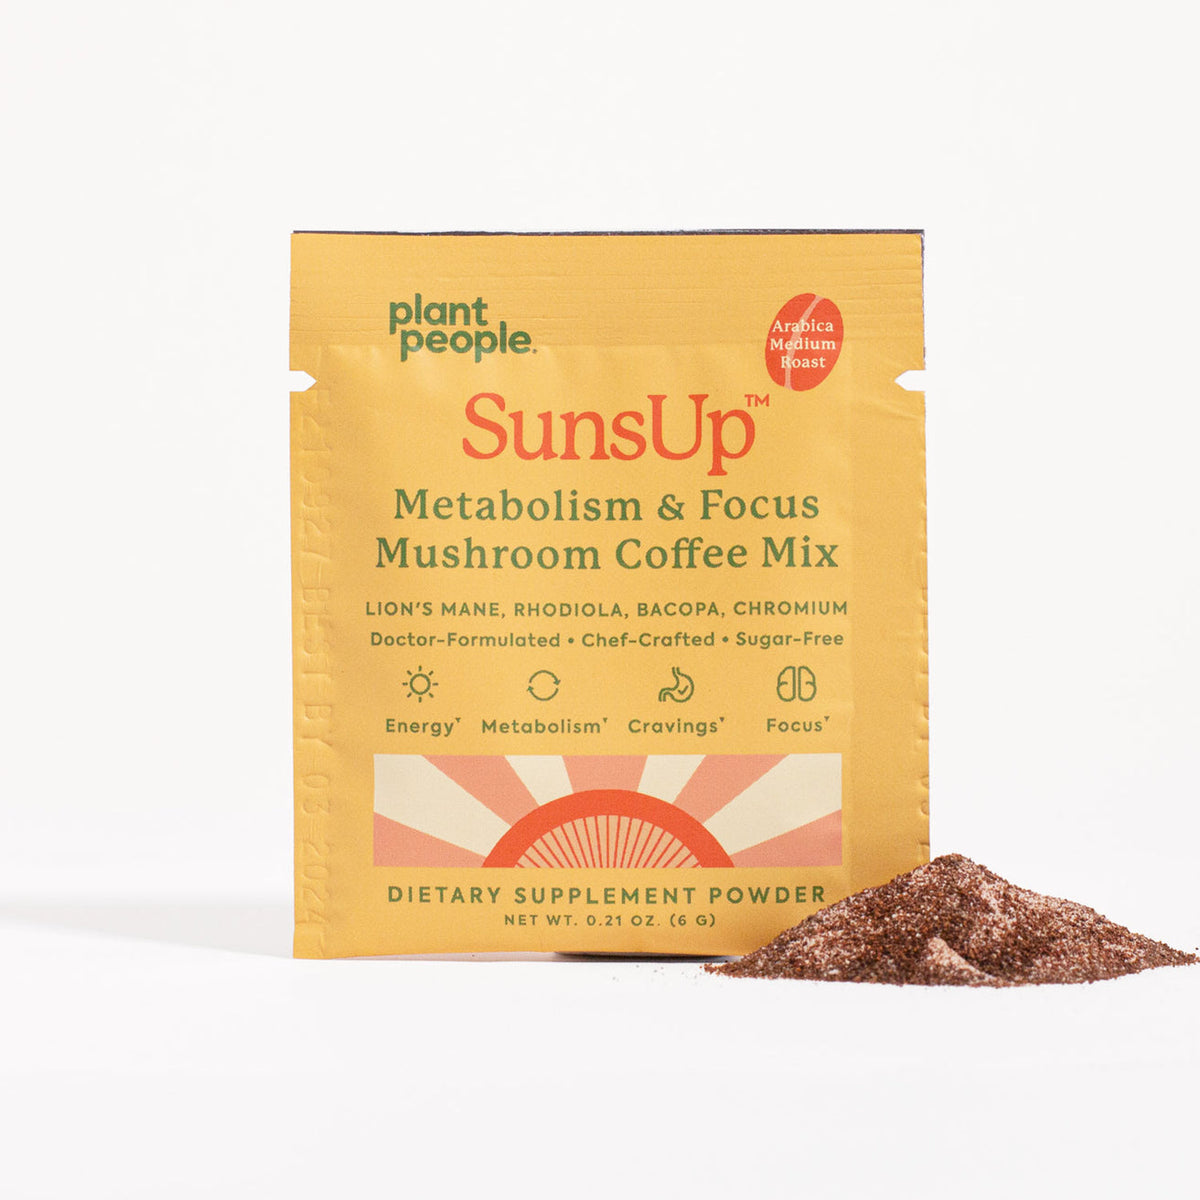 SunsUp Mushroom Coffee Mix by Plant People